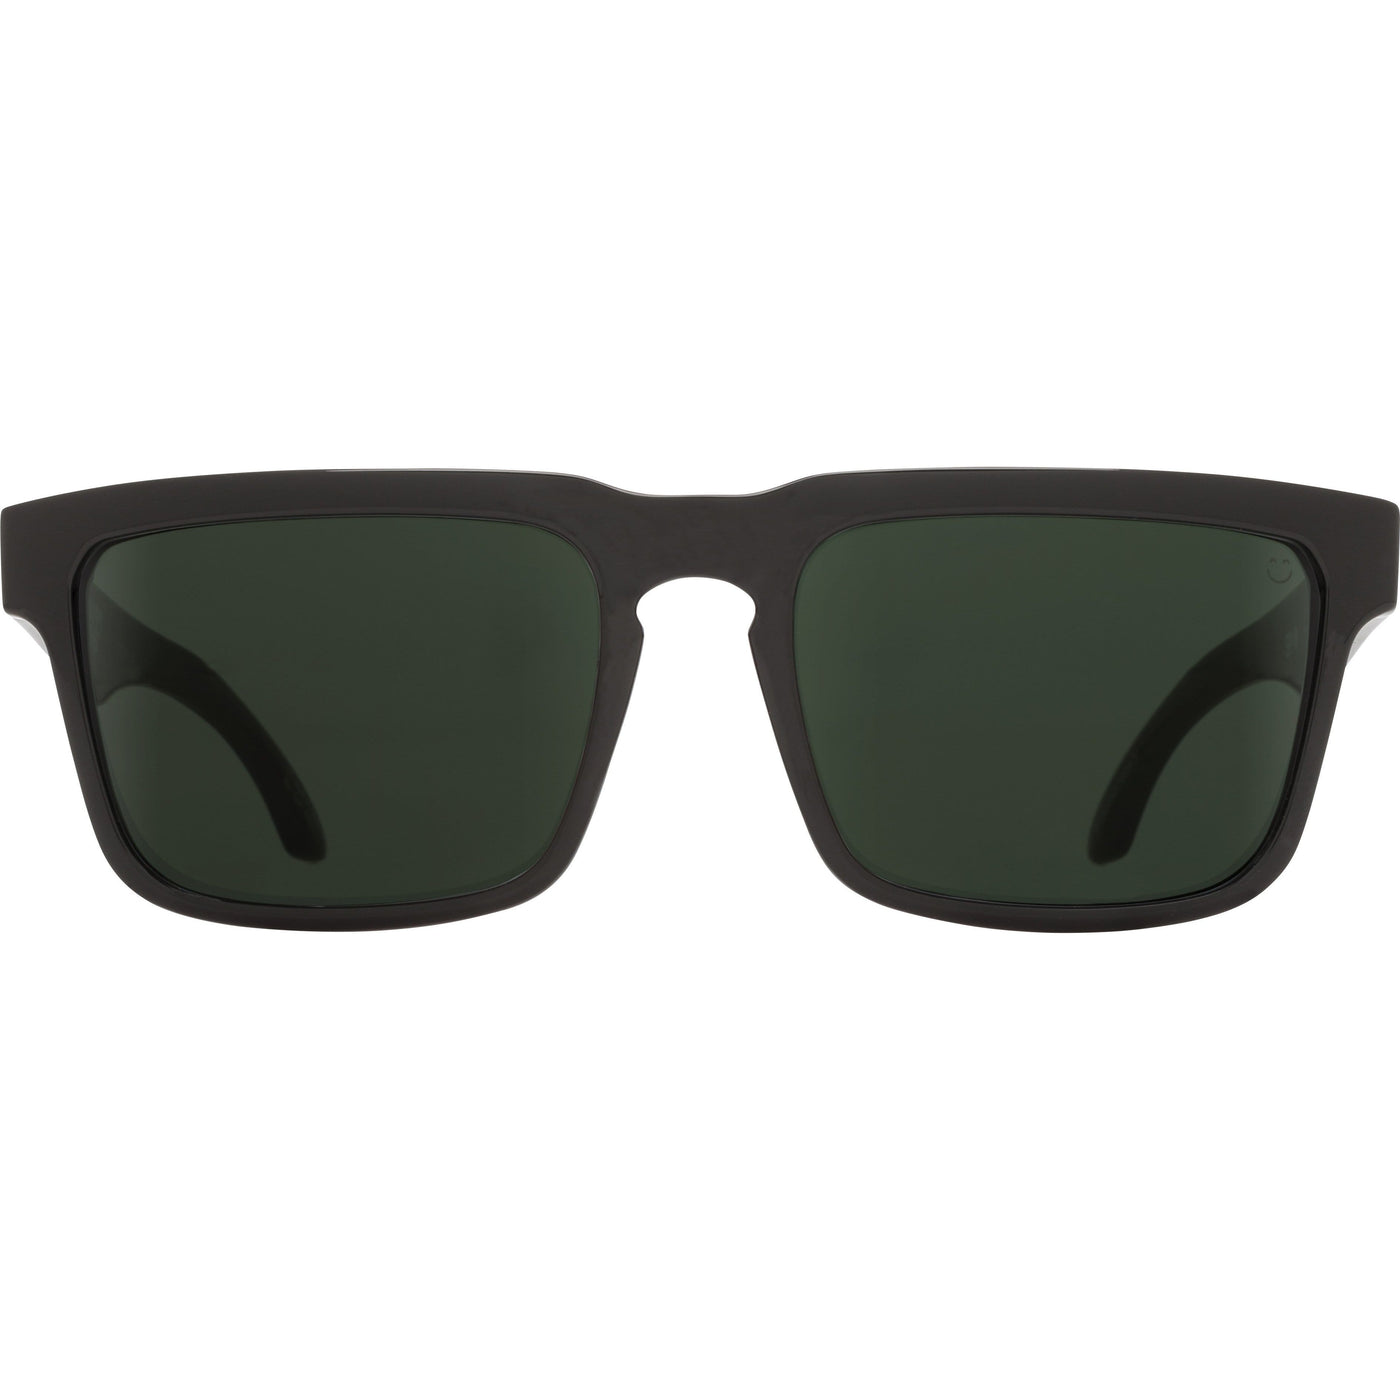 SPY HELM Sunglasses, Happy Lens - Gloss Black 8Lines Shop - Fast Shipping